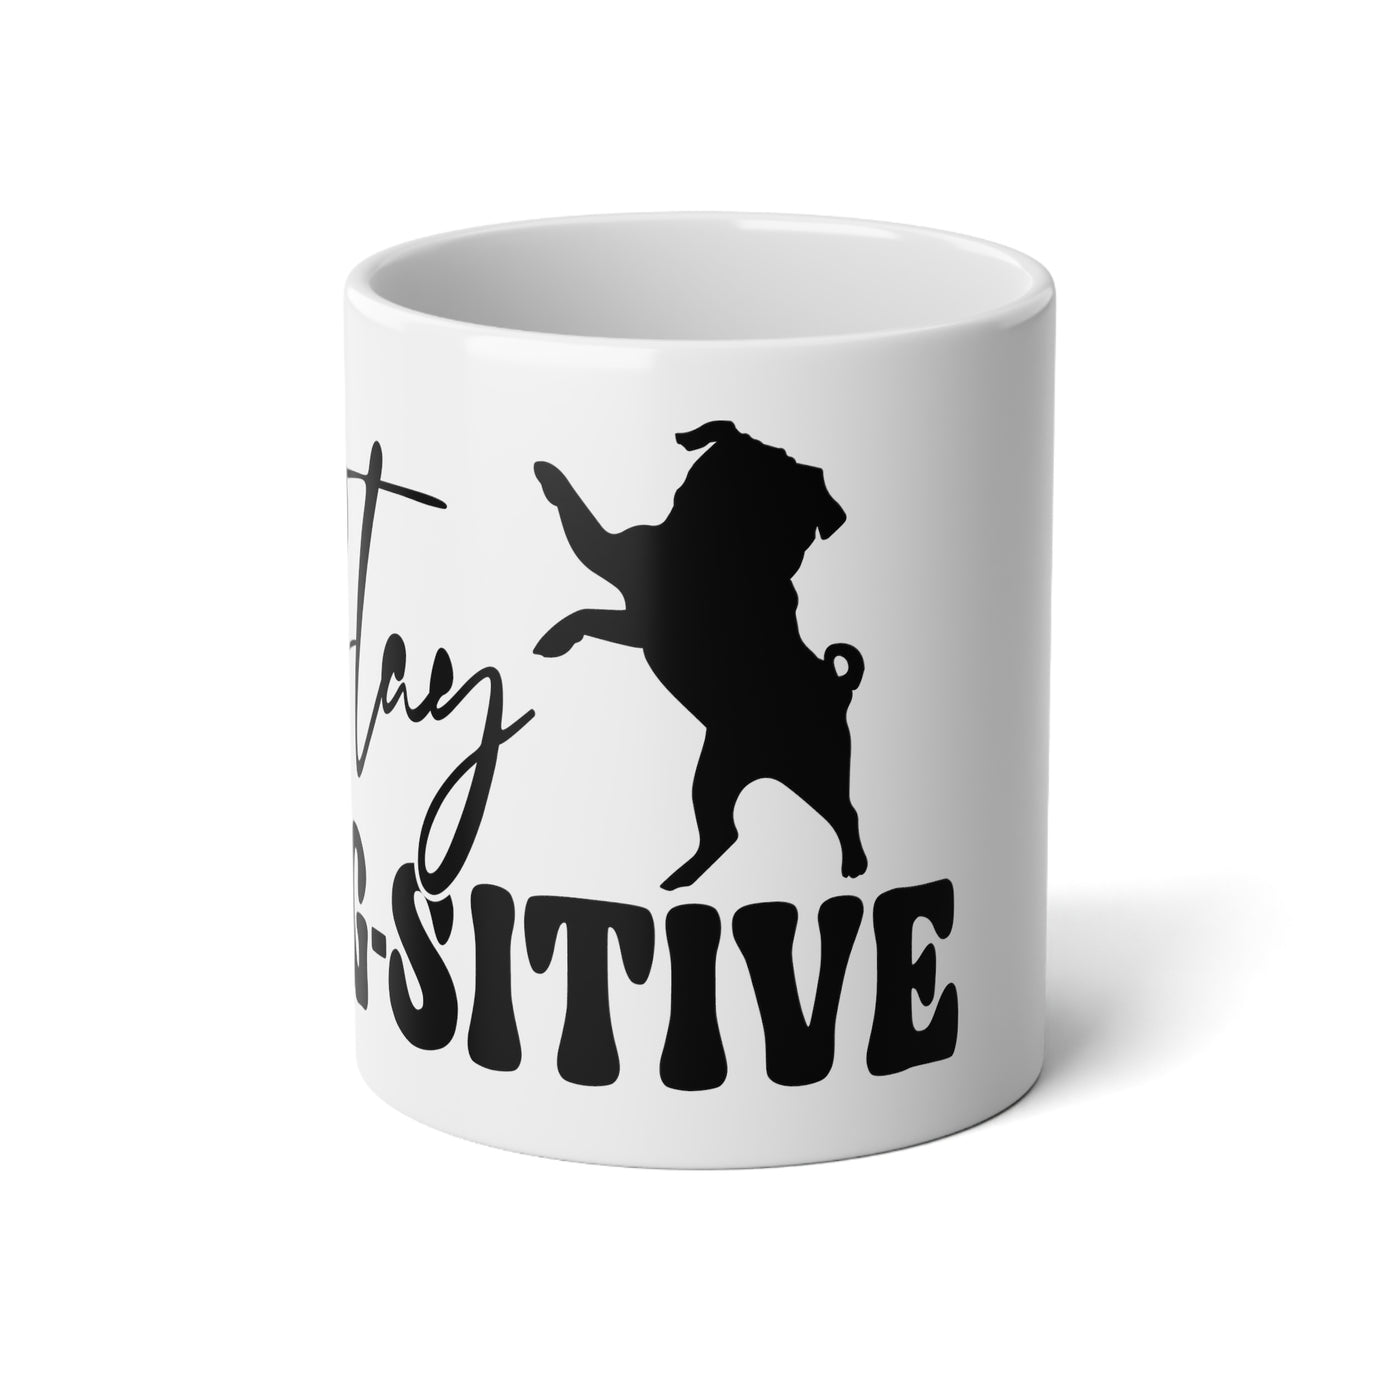 Stay Pugsitive Mug